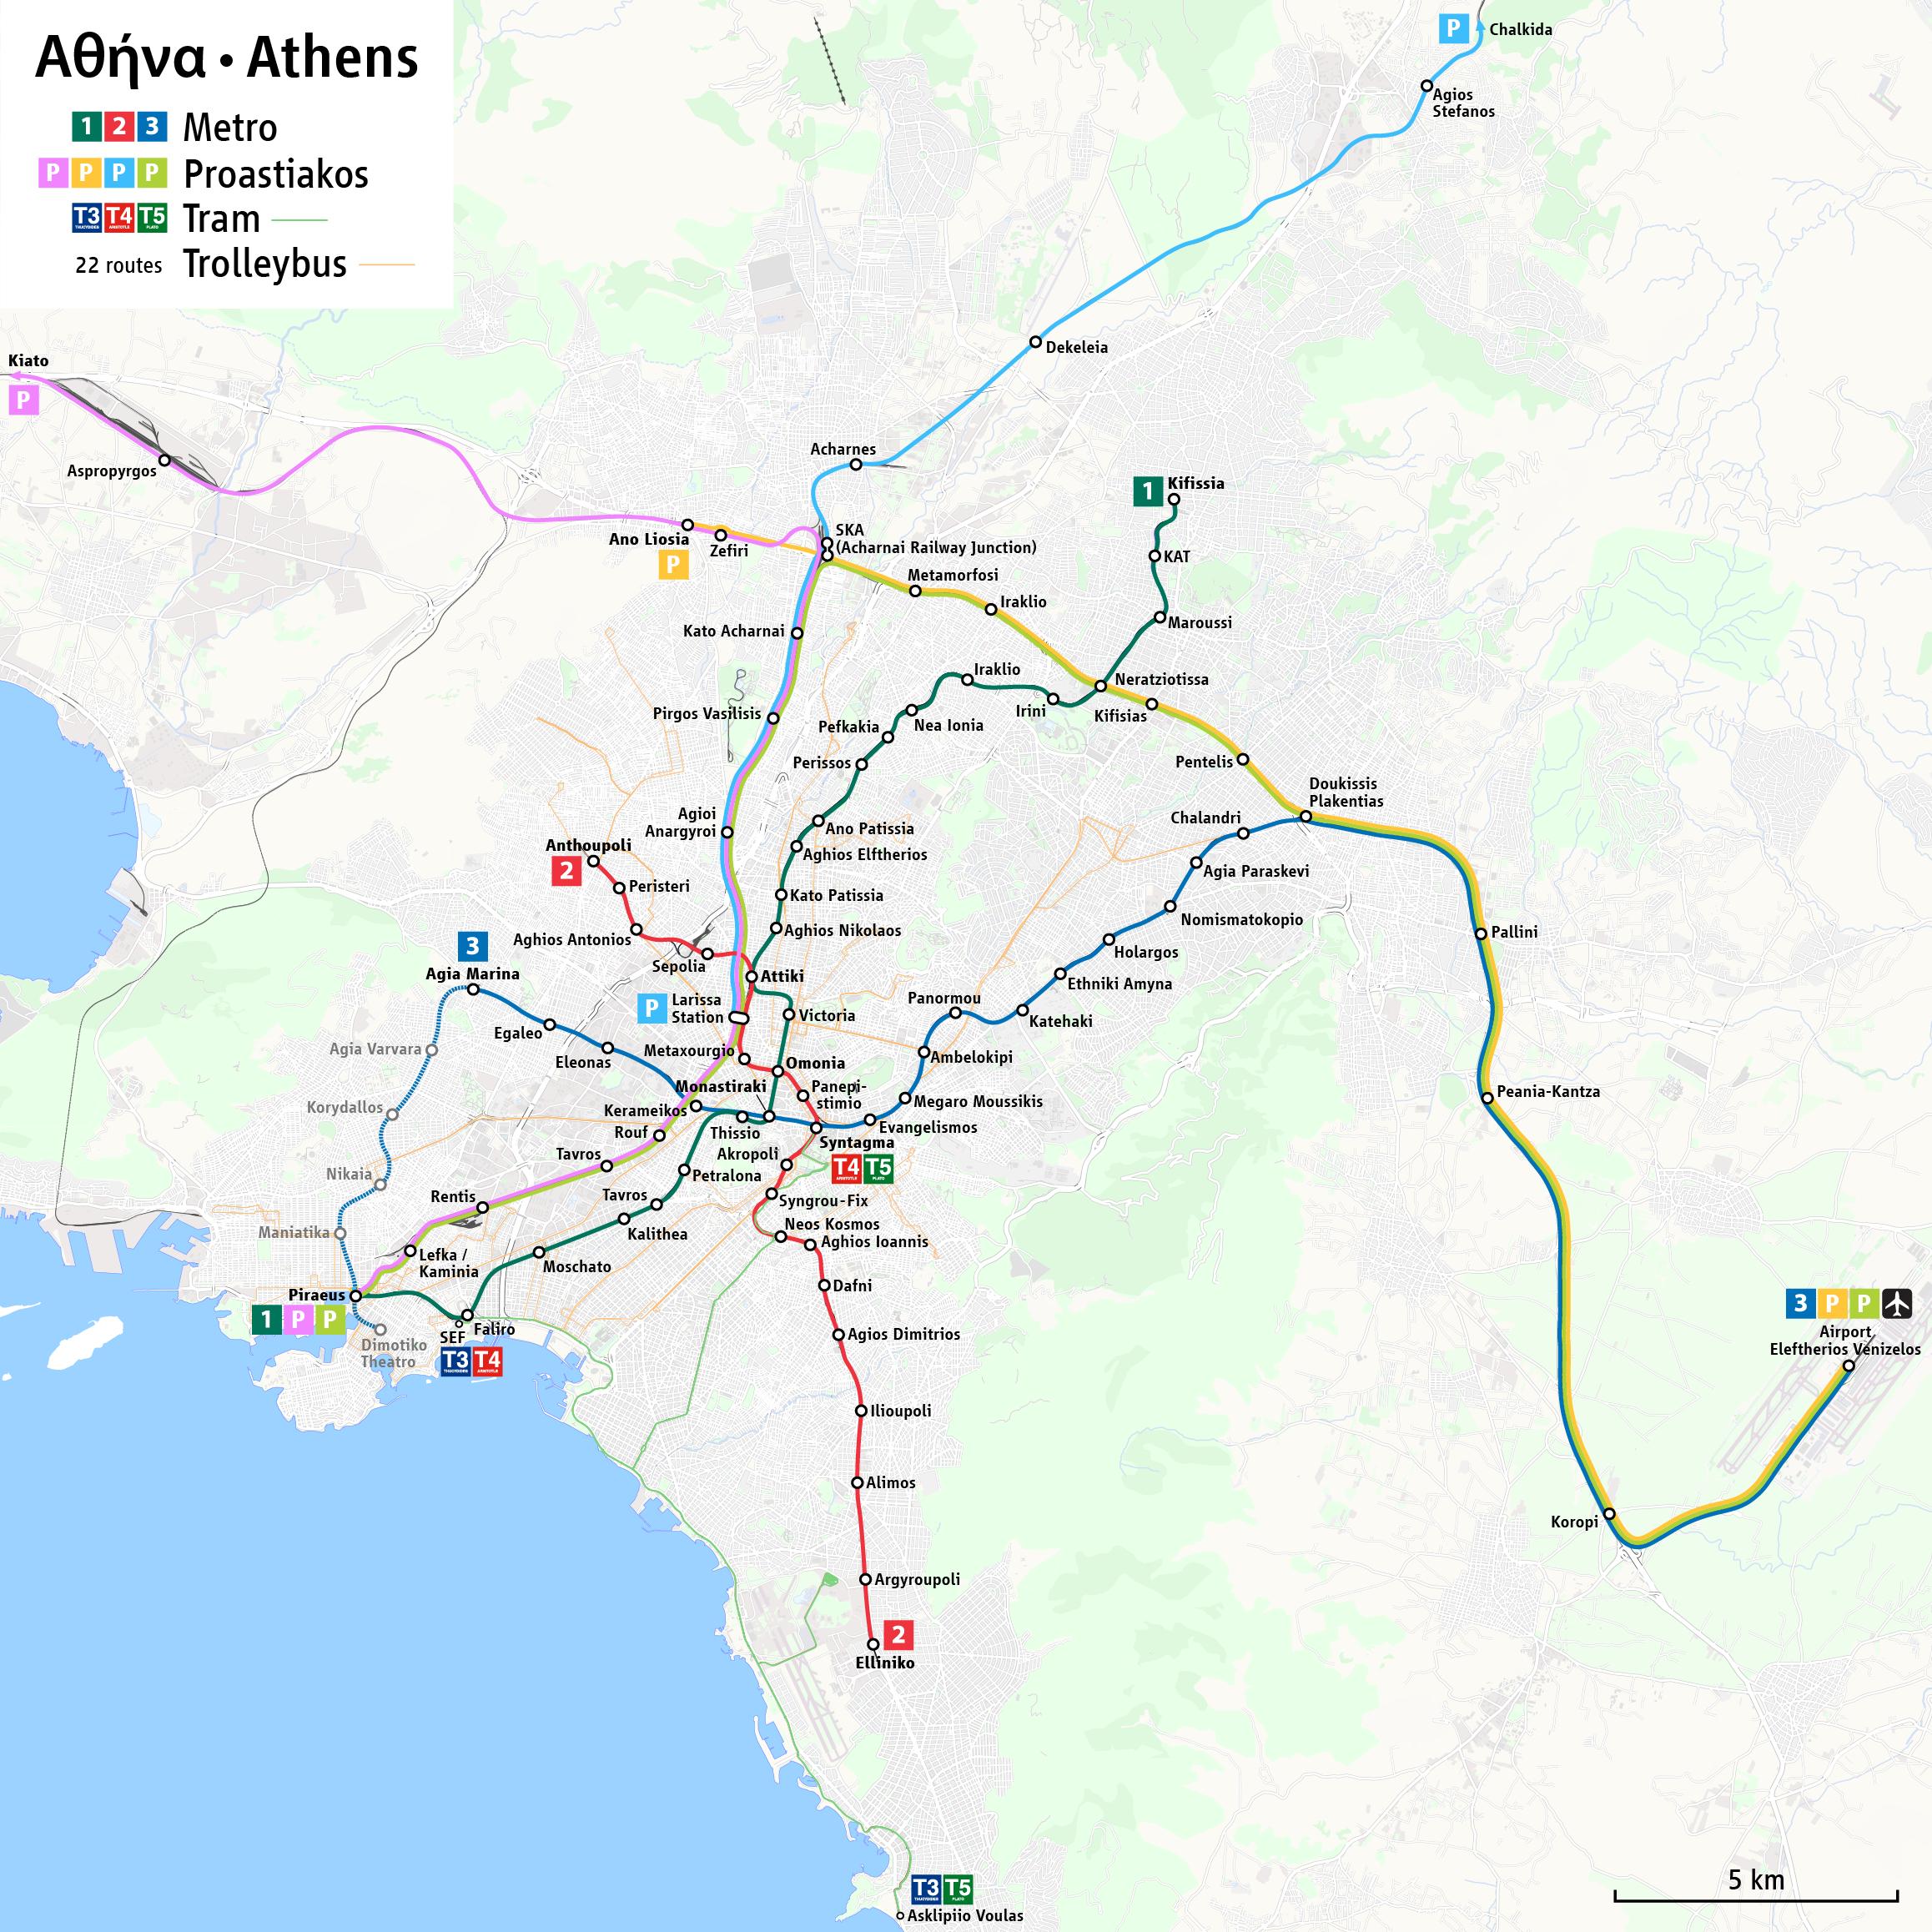 Athens greece metro map - Athens metro and tram map (Greece)